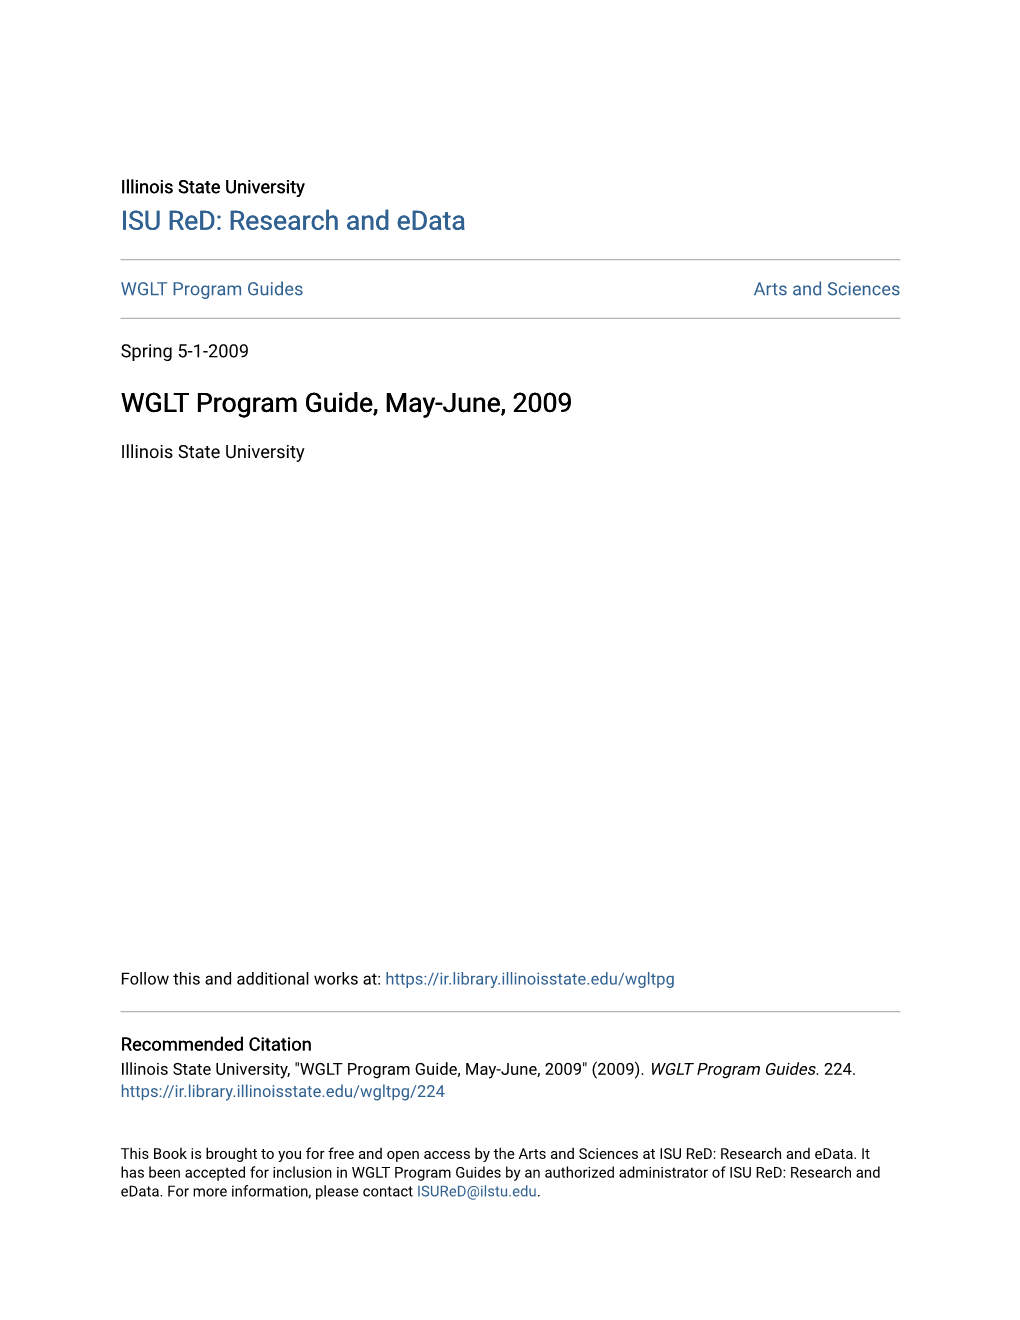 WGLT Program Guide, May-June, 2009